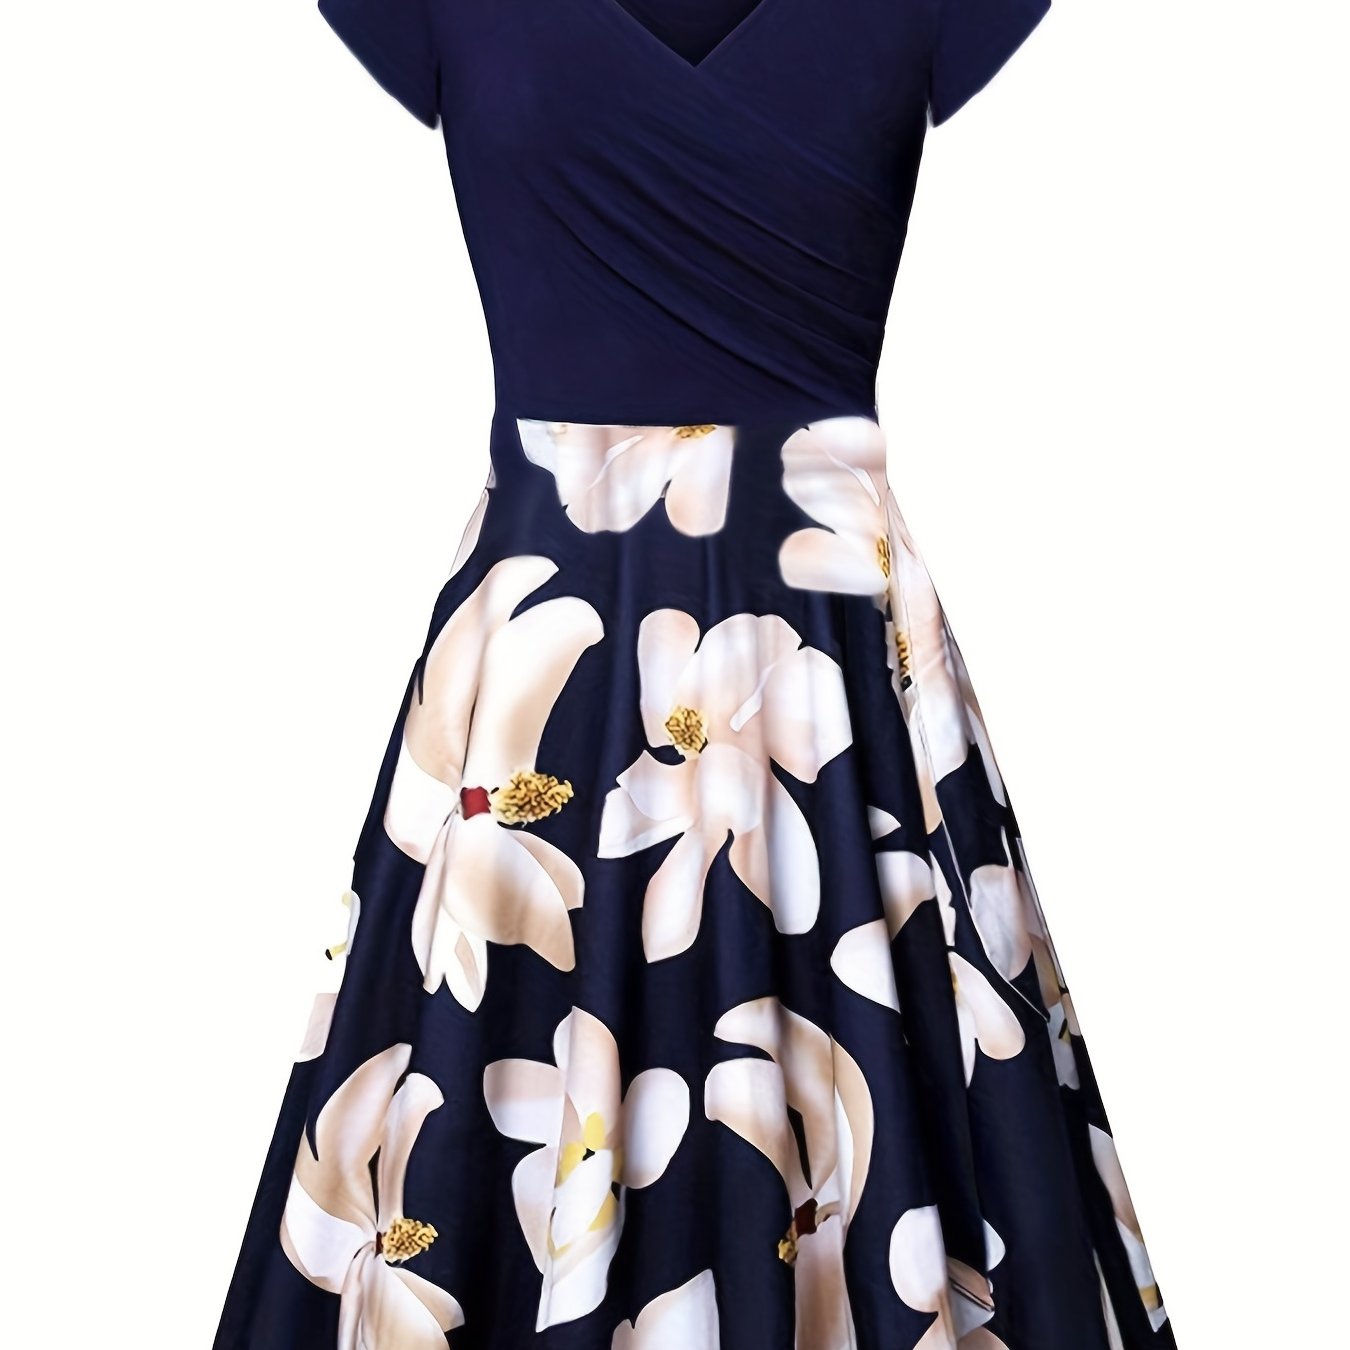 Floral Print V Neck Dress, Elegant Short Sleeve Dress For Spring & Summer, Women's Clothing